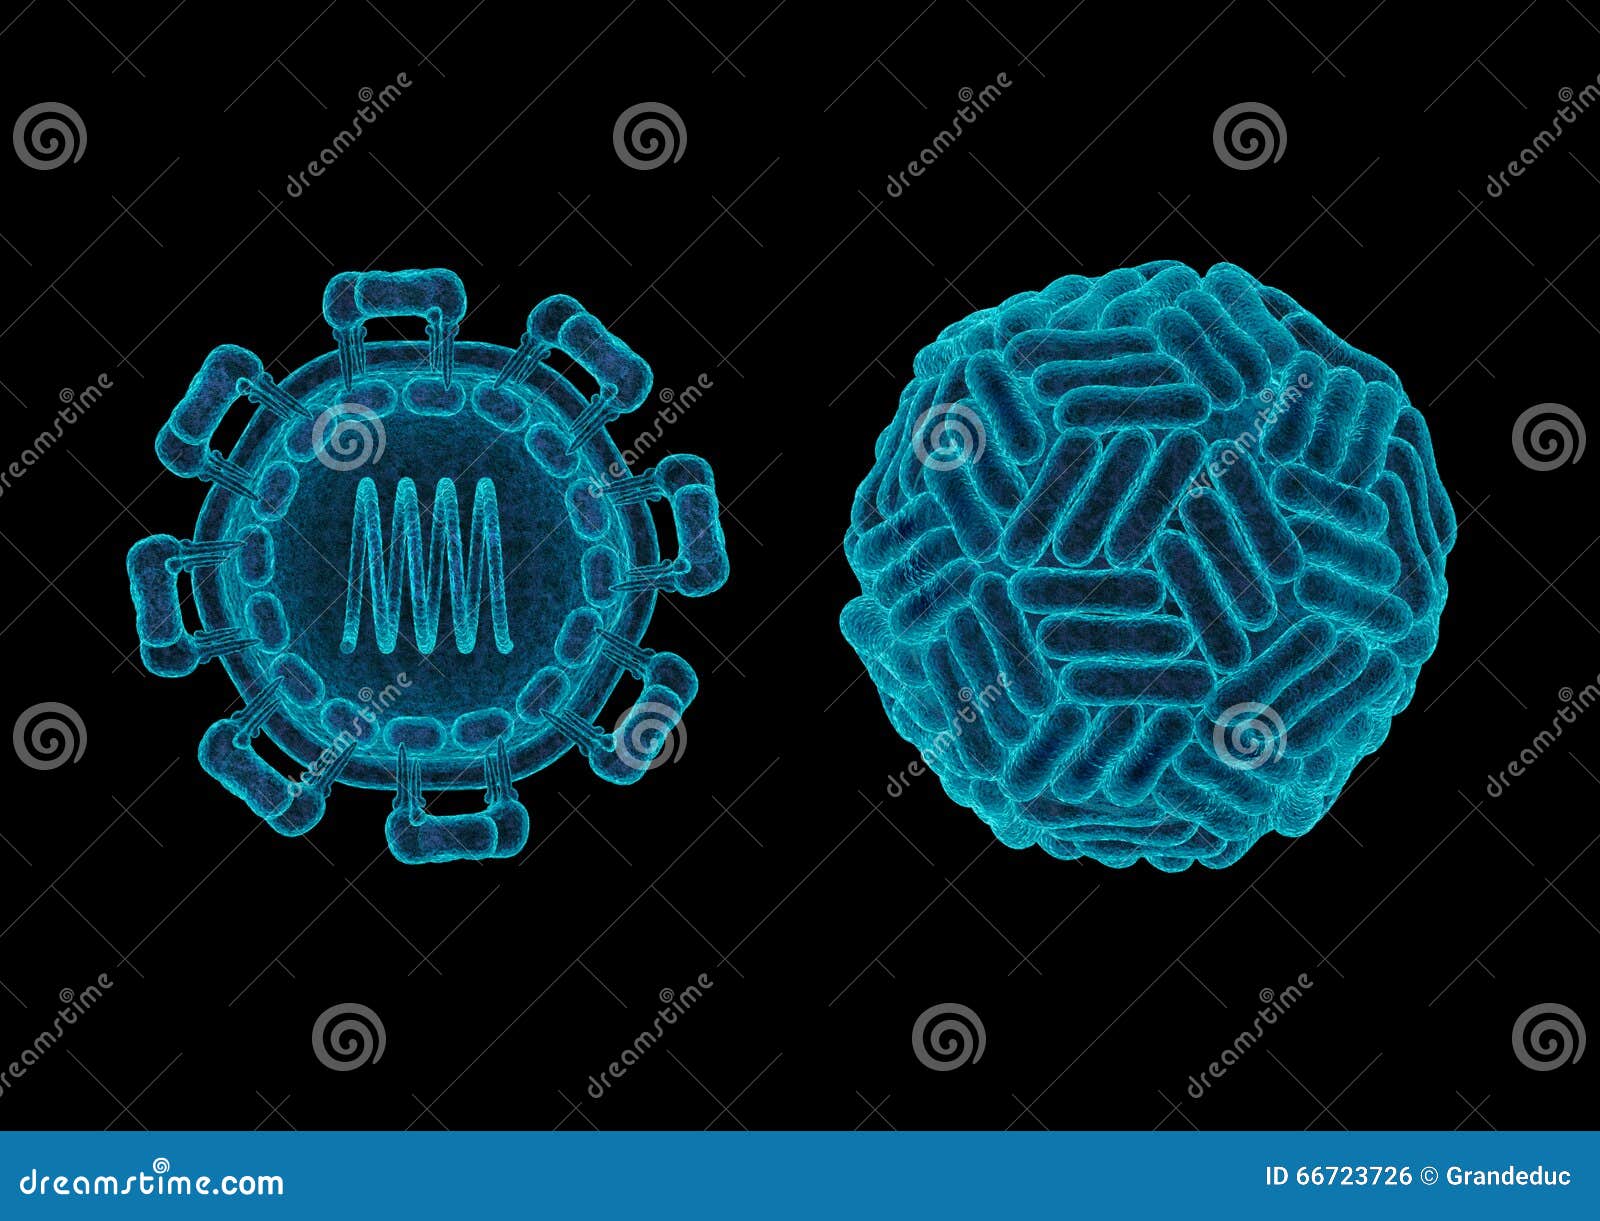 zika virus structure concept